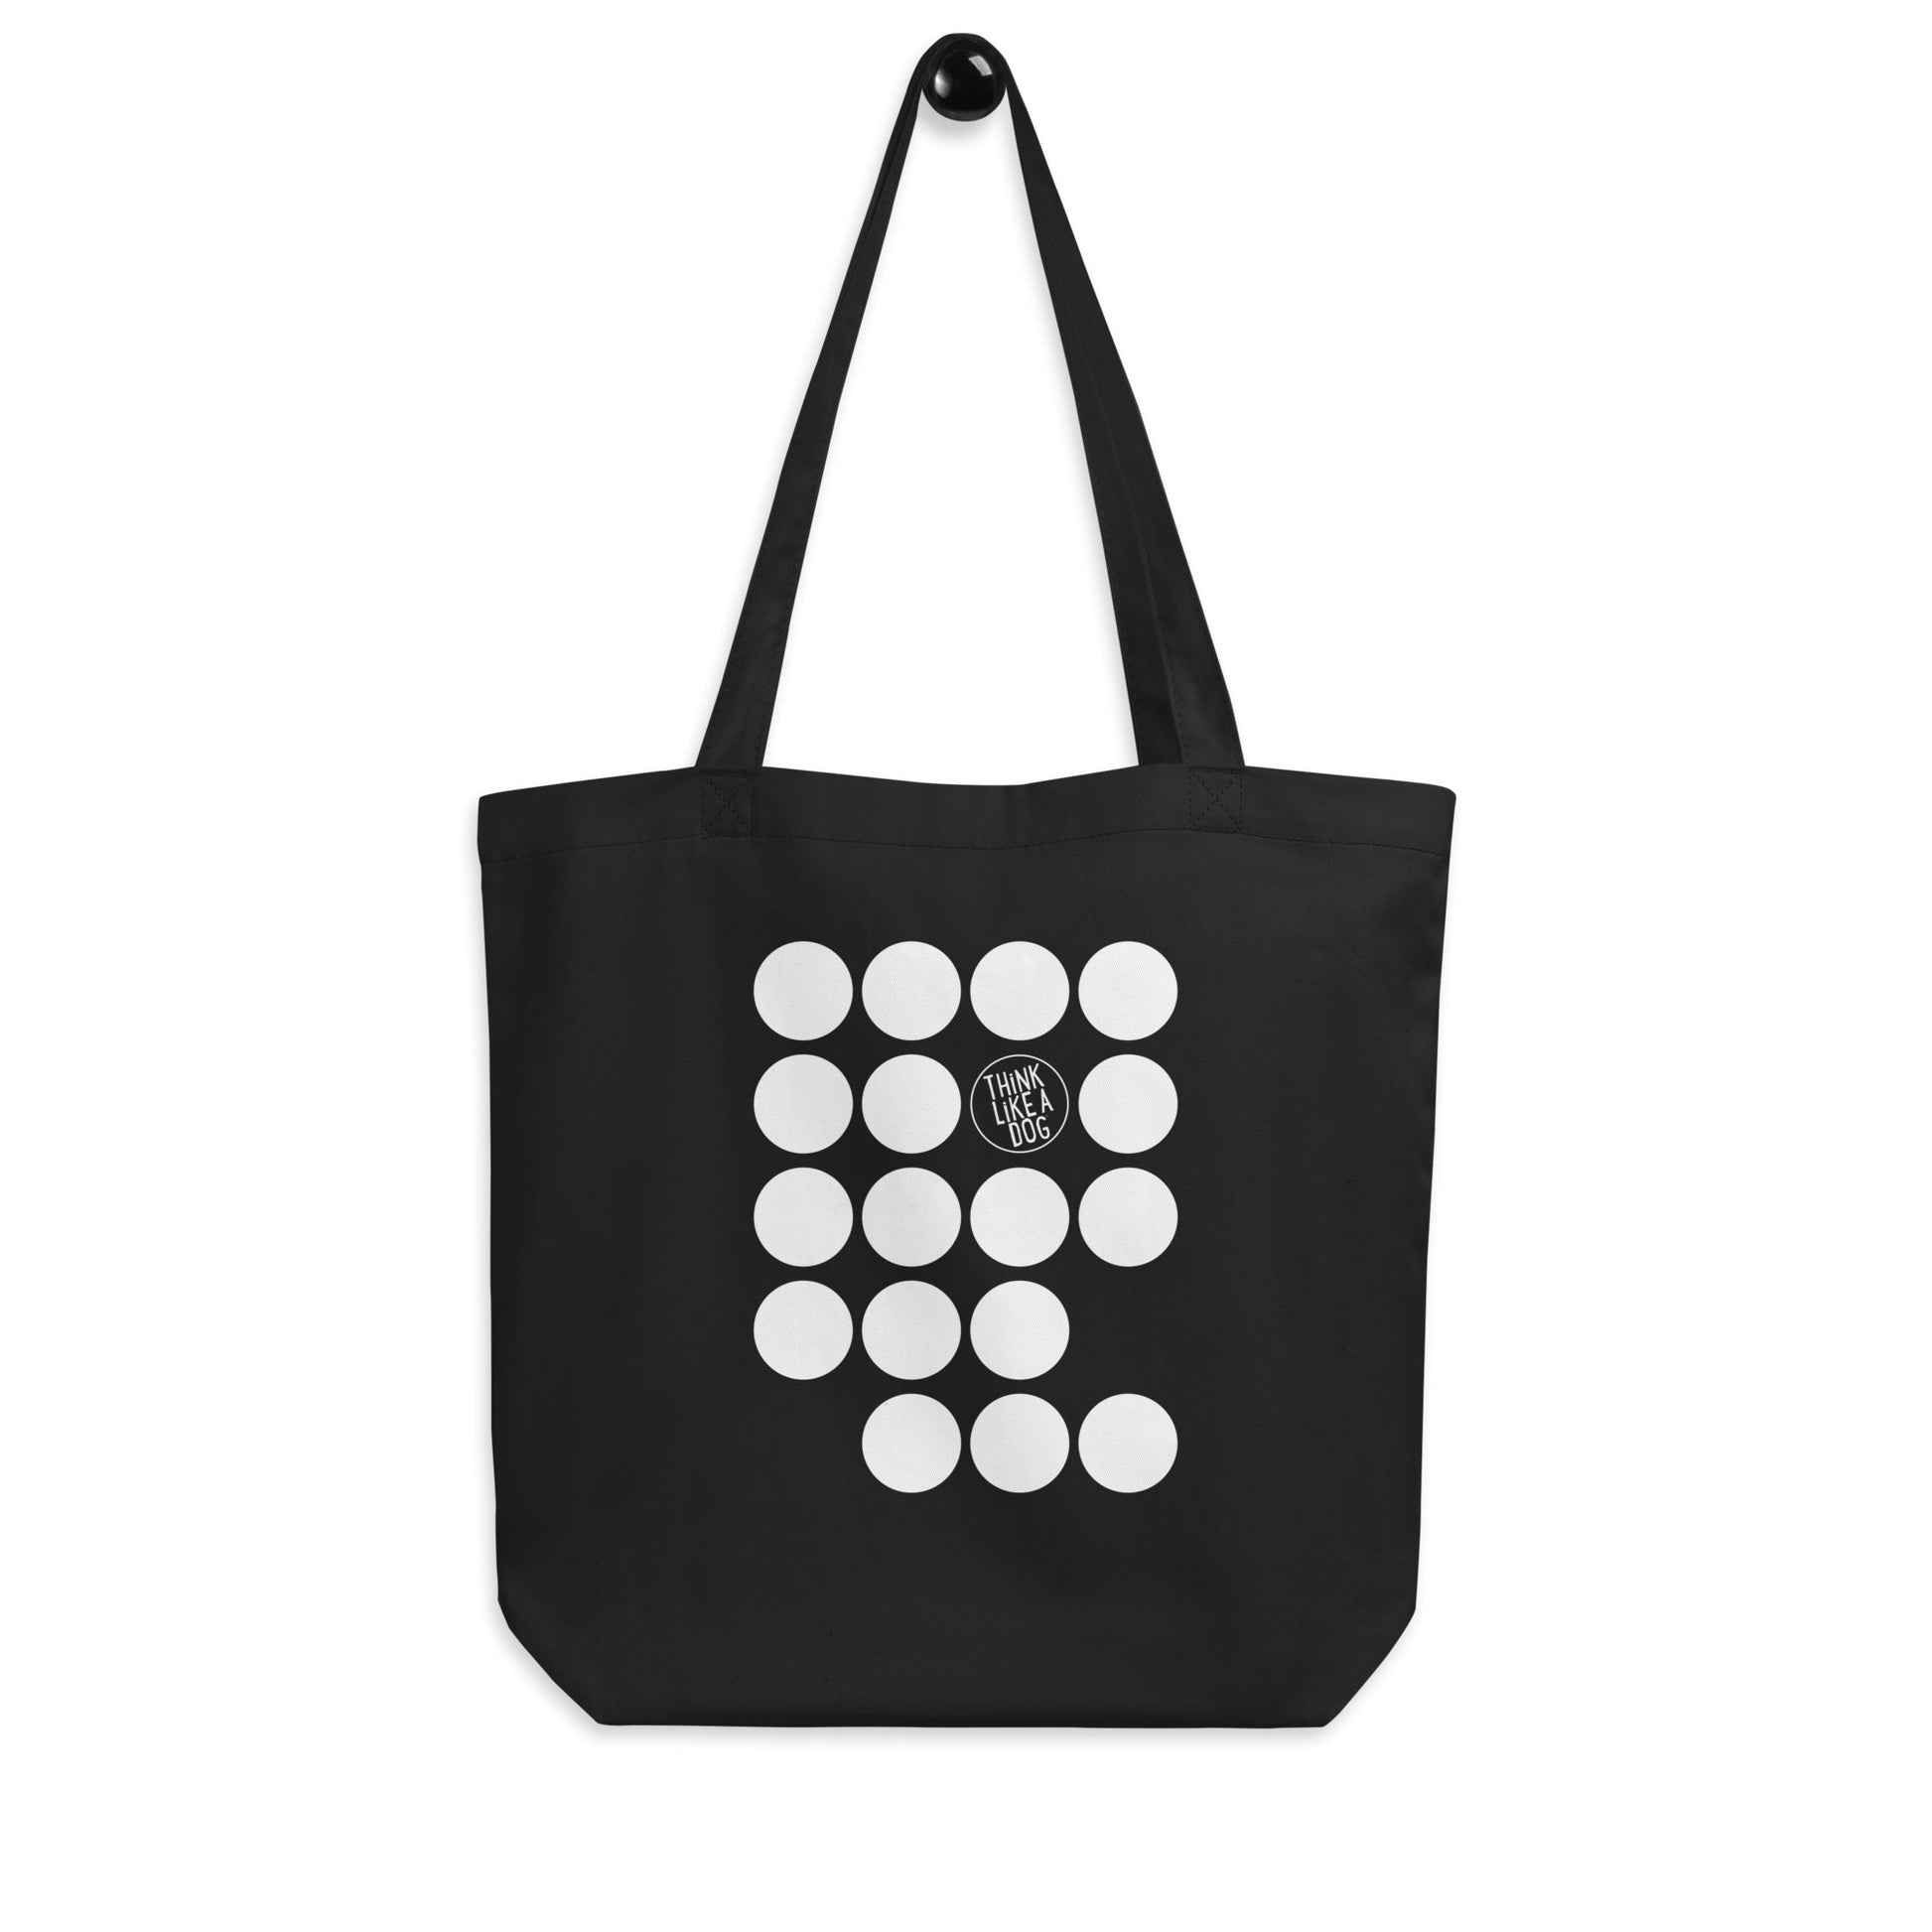 Black Eco Tote Bag with White Spots Logo - THiNK LiKE A DOG®